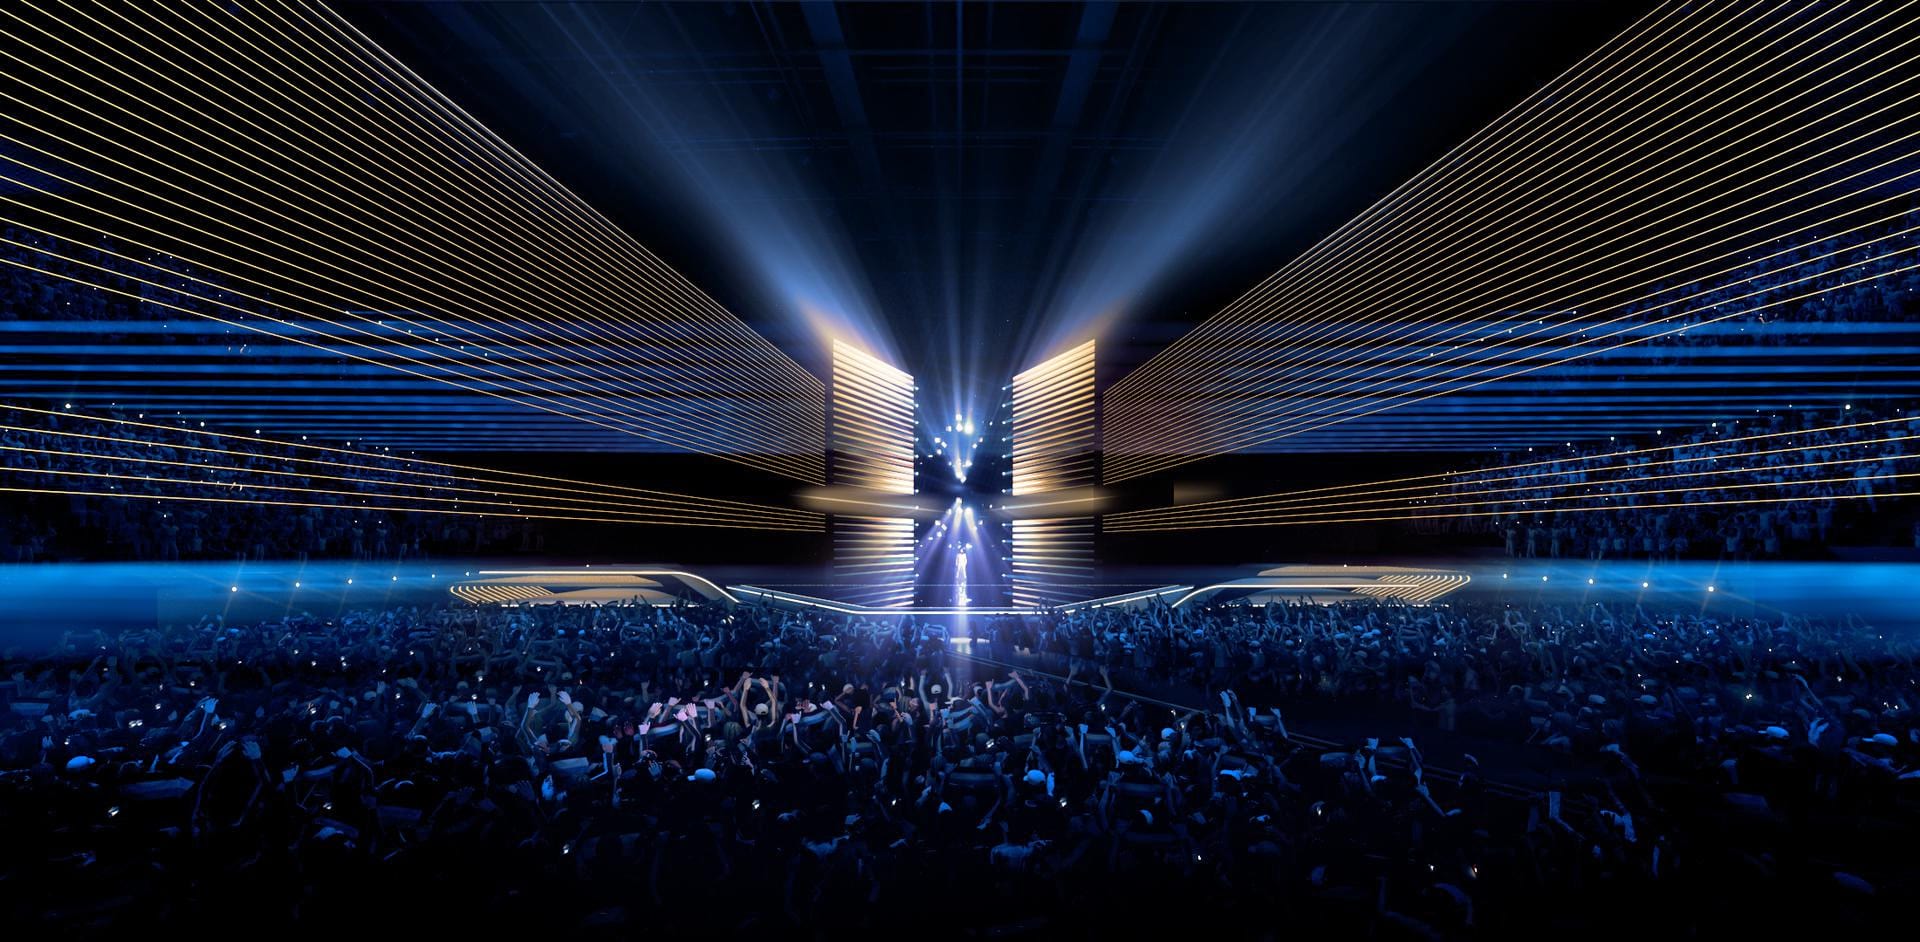 Eurovision 2020 NPO unveils the stage design